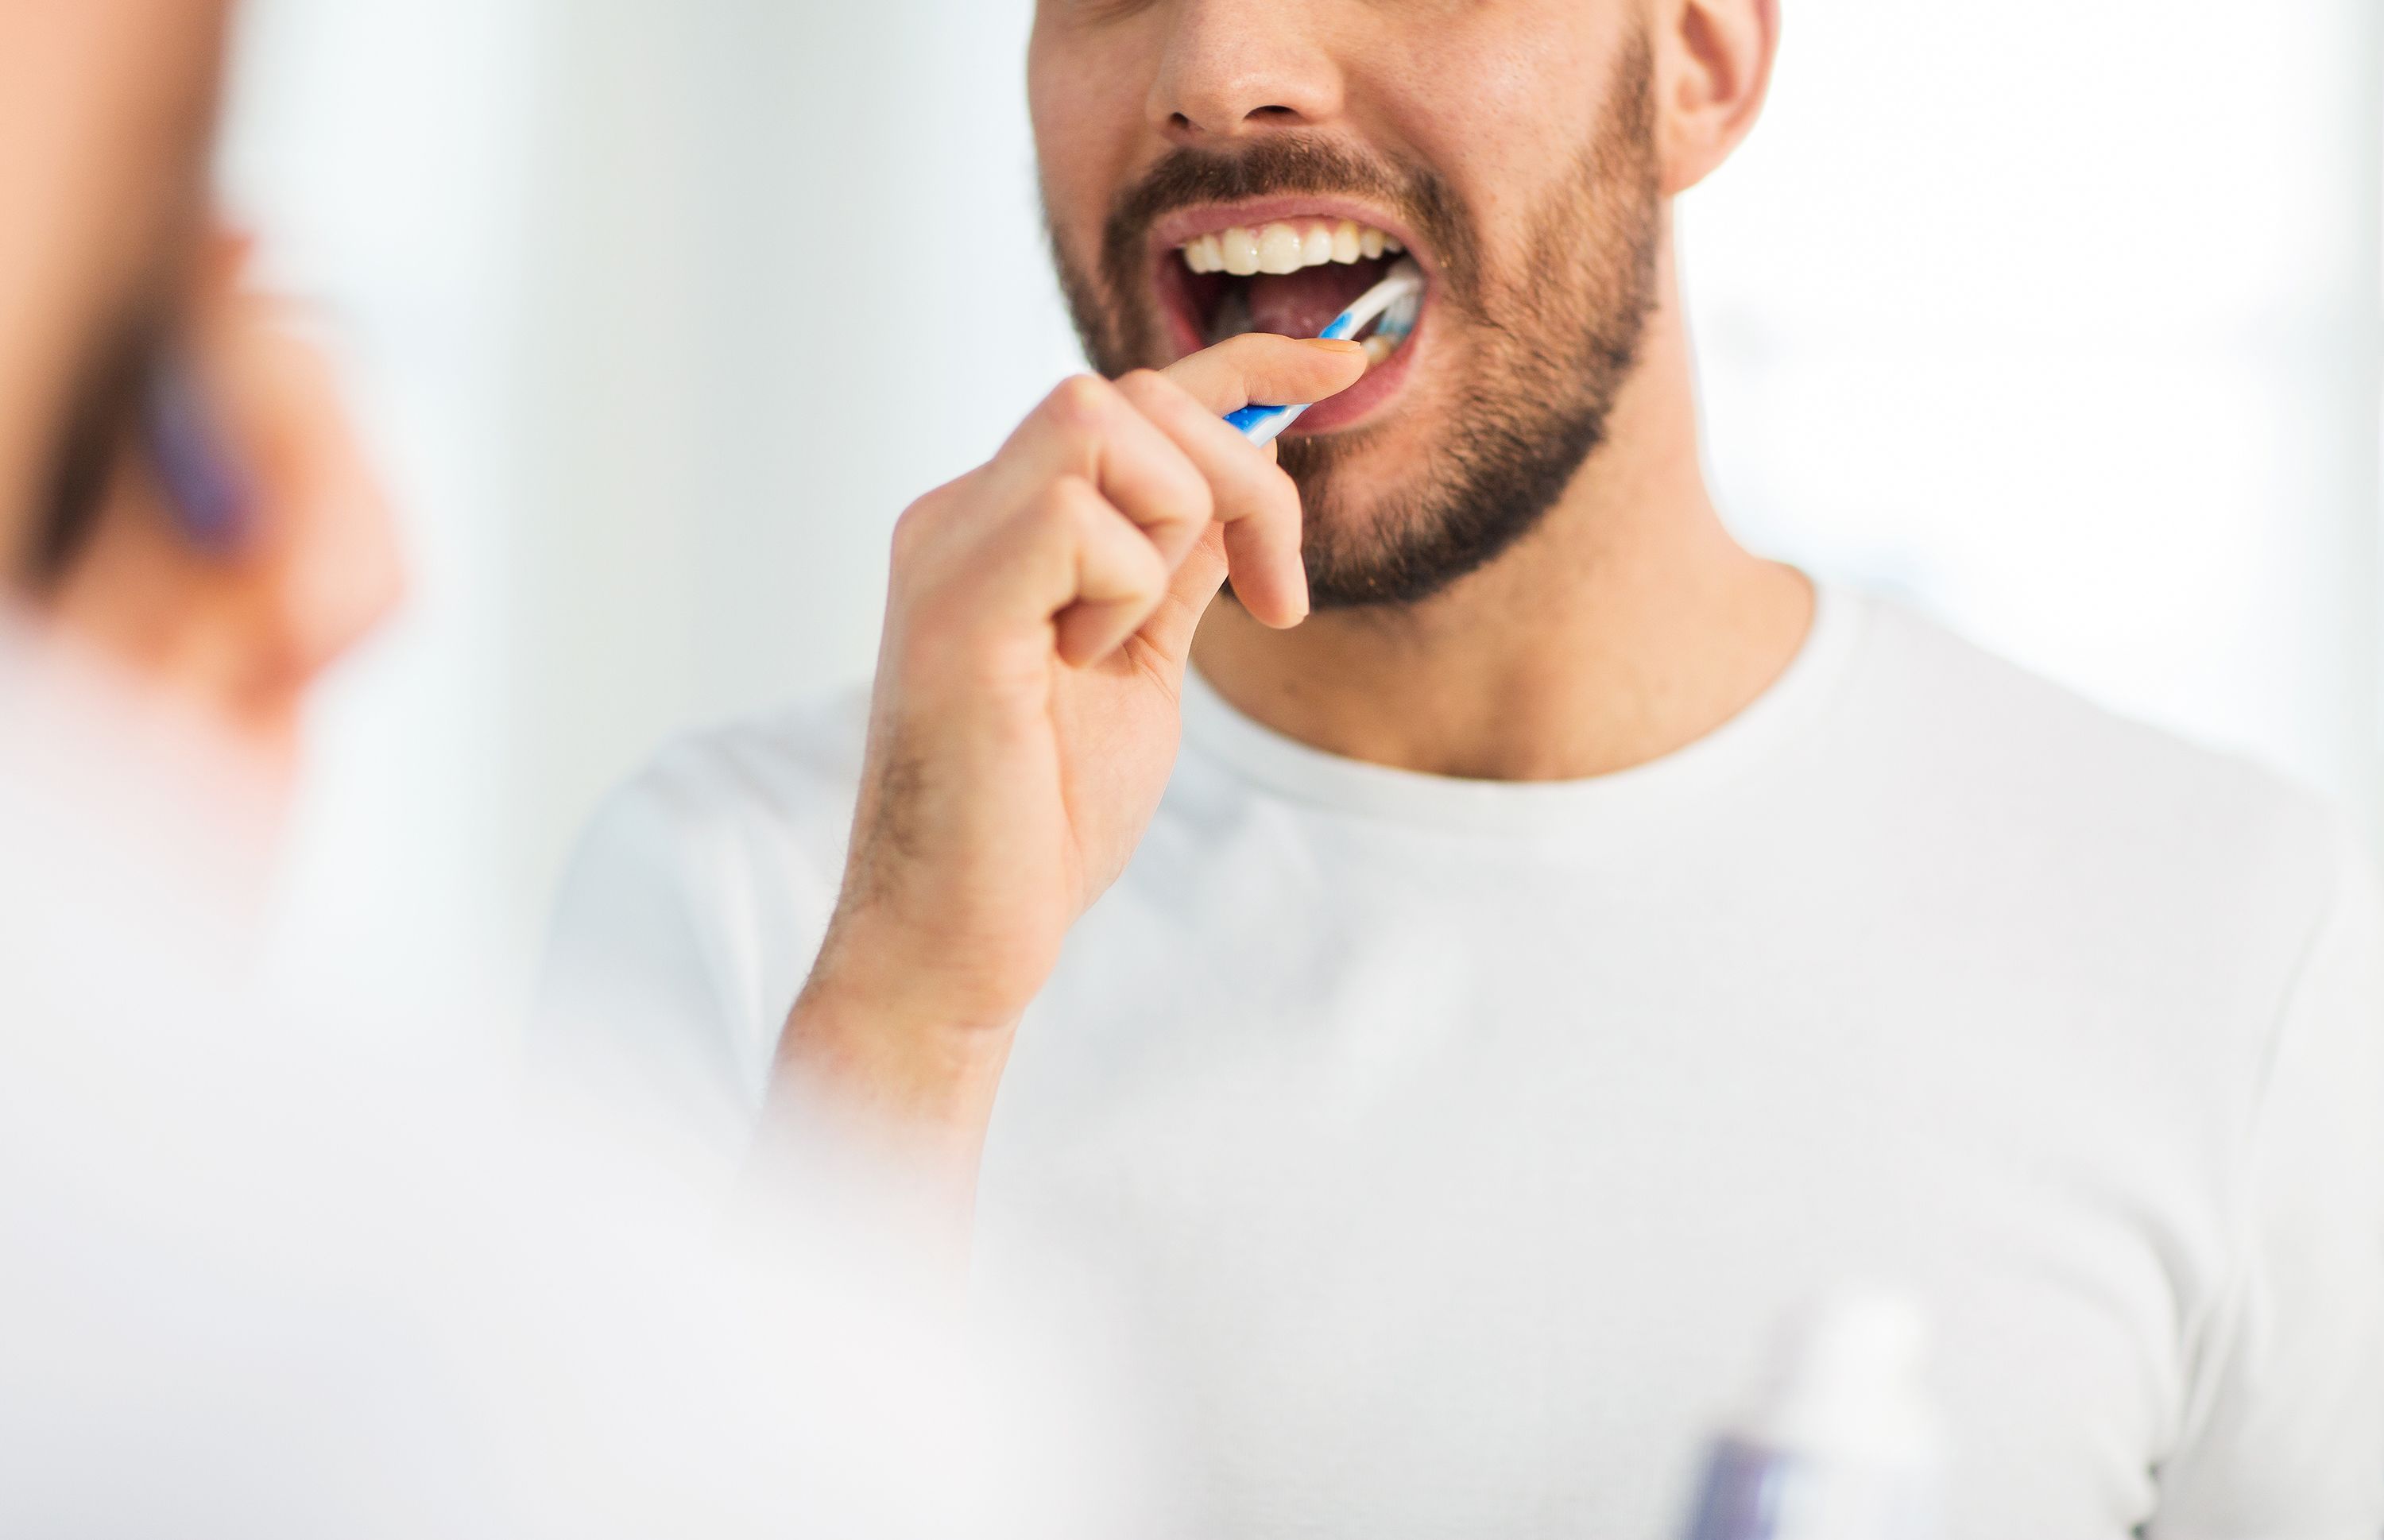 brush teeth image